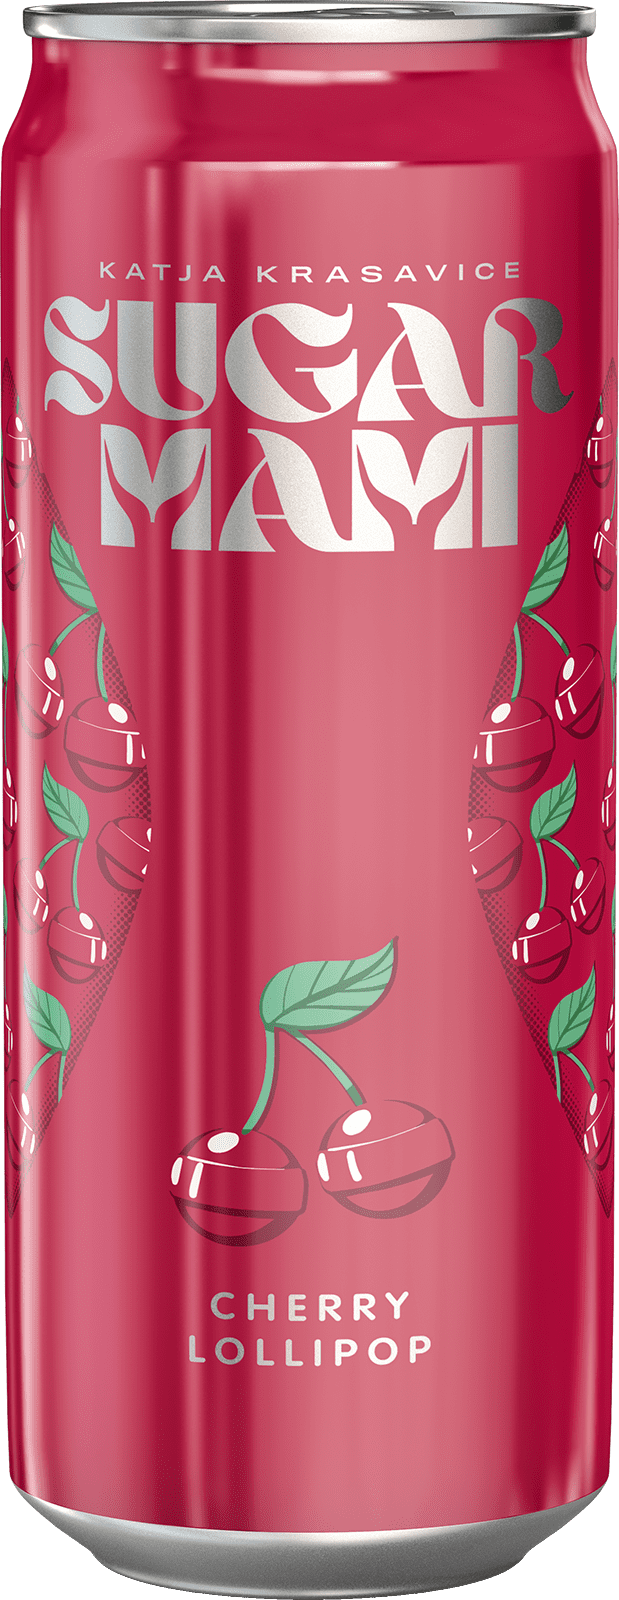 Sugar Mami Cherry-Lollipop (1 x 0.33 l)